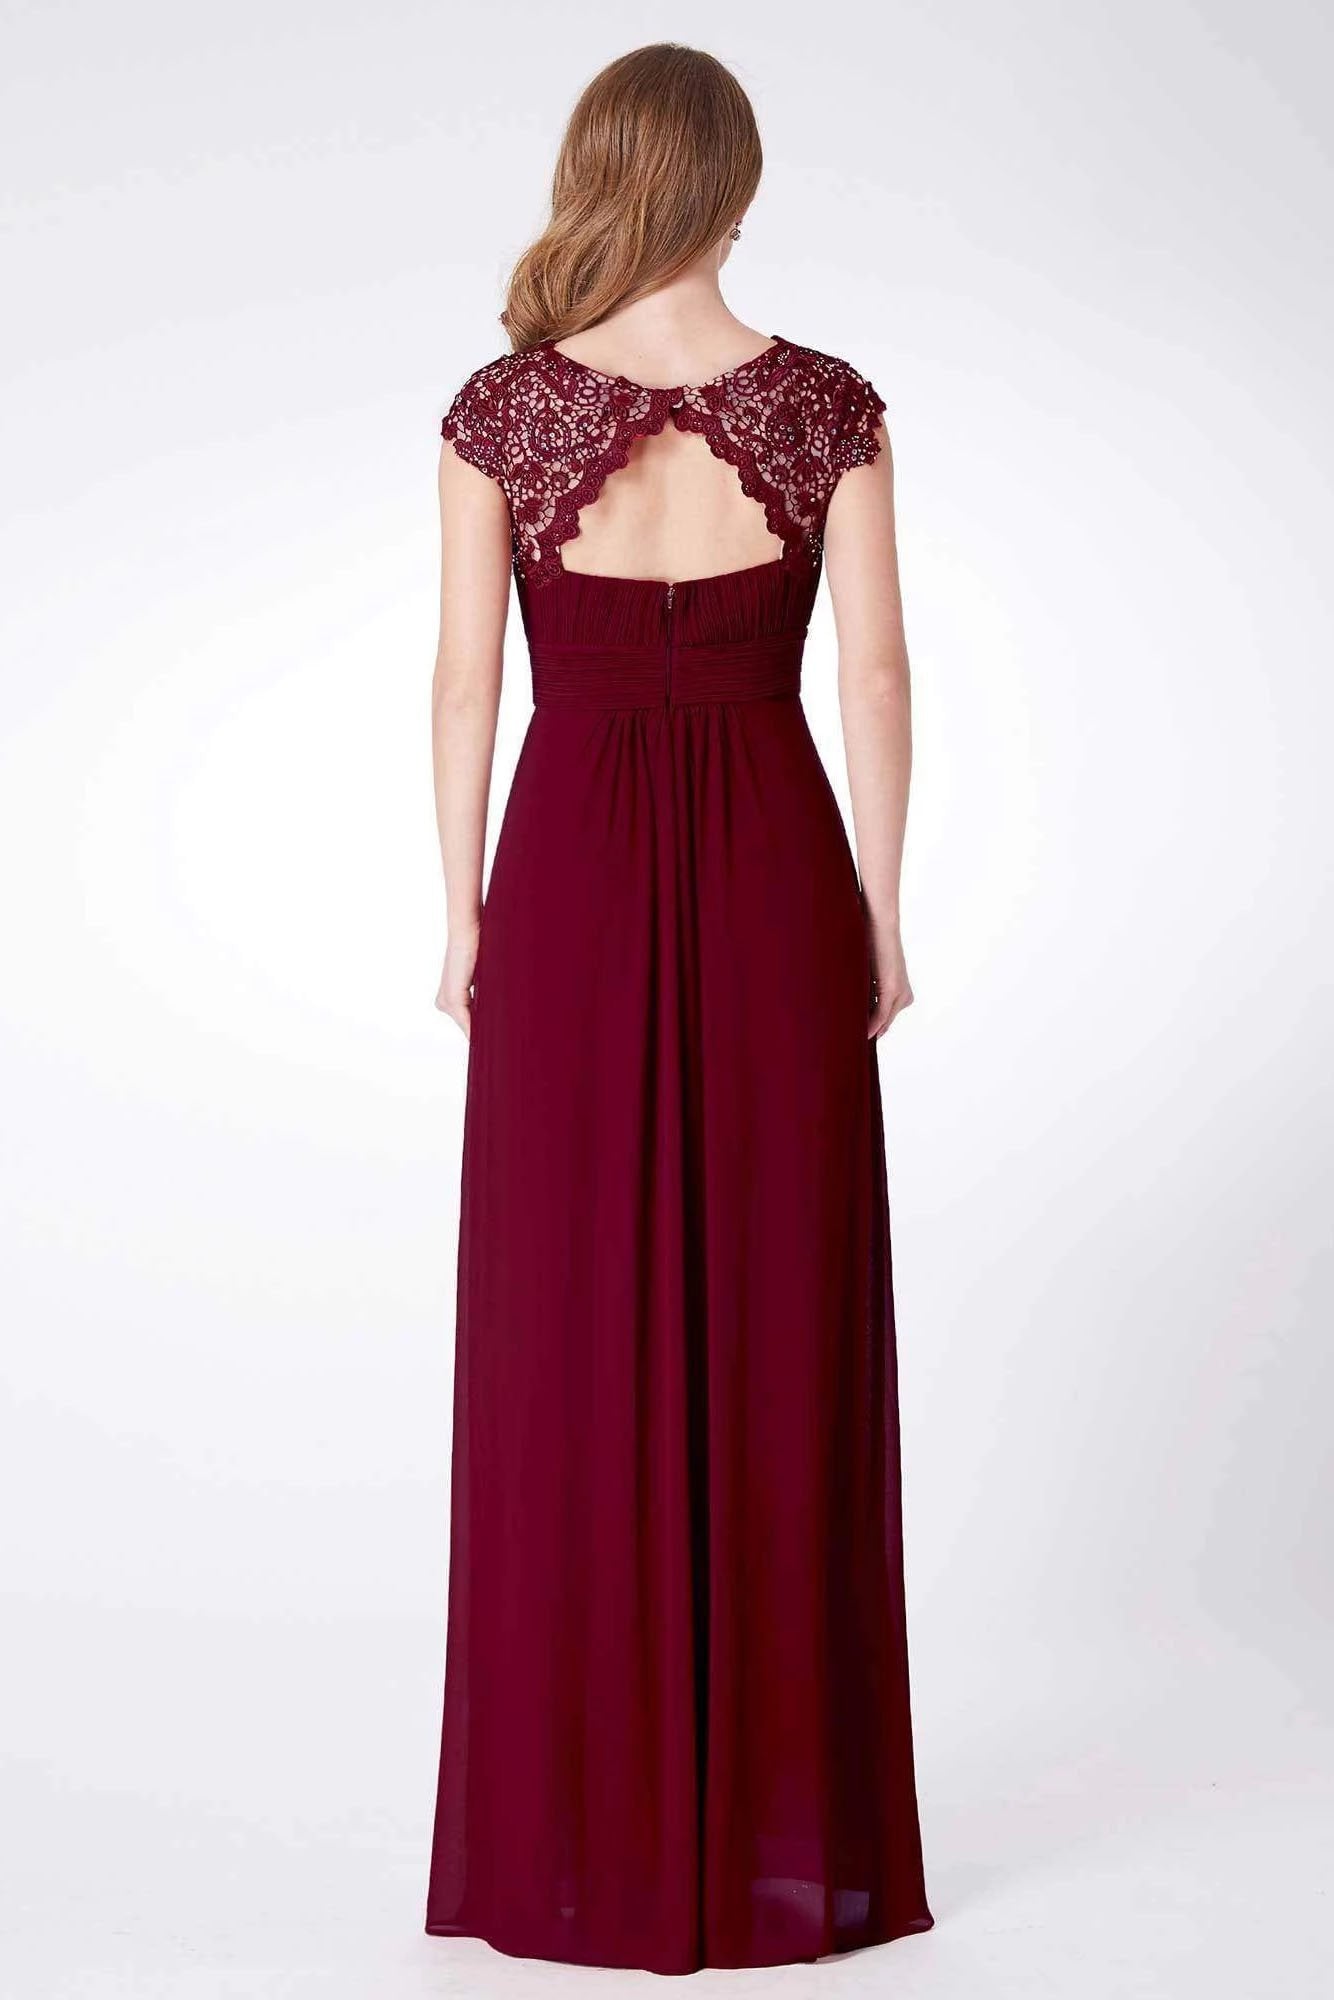 Elegant A Line Cap Sleeve Burgundy Lace Prom Dresses with Chiffon, Bridesmaid Dresses STC15145